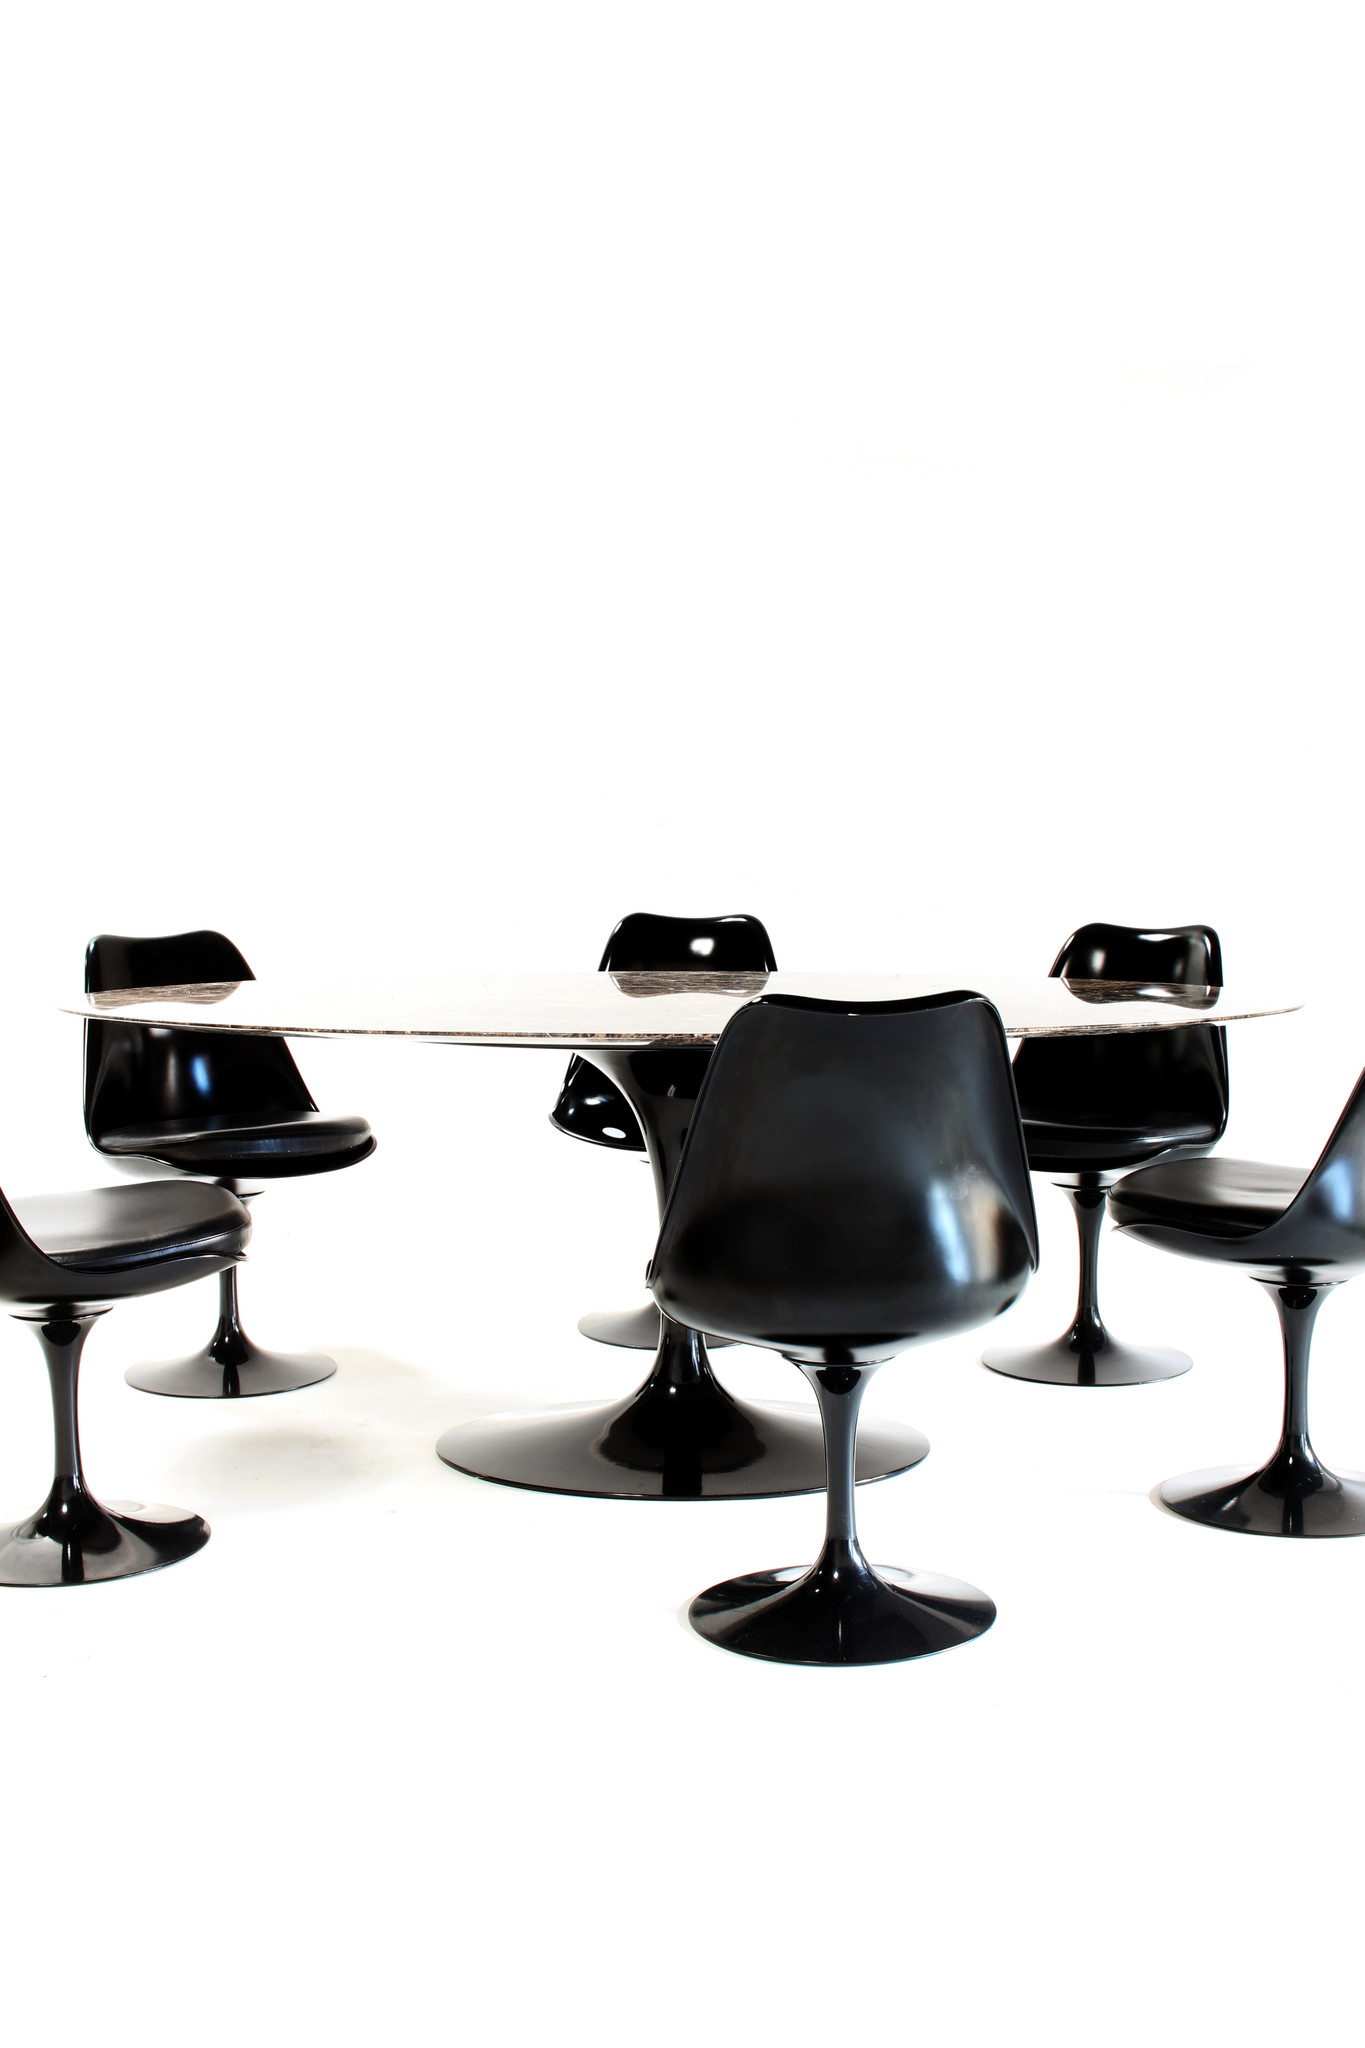 Eero Saarinen Knoll oval table with matching tulip chairs.